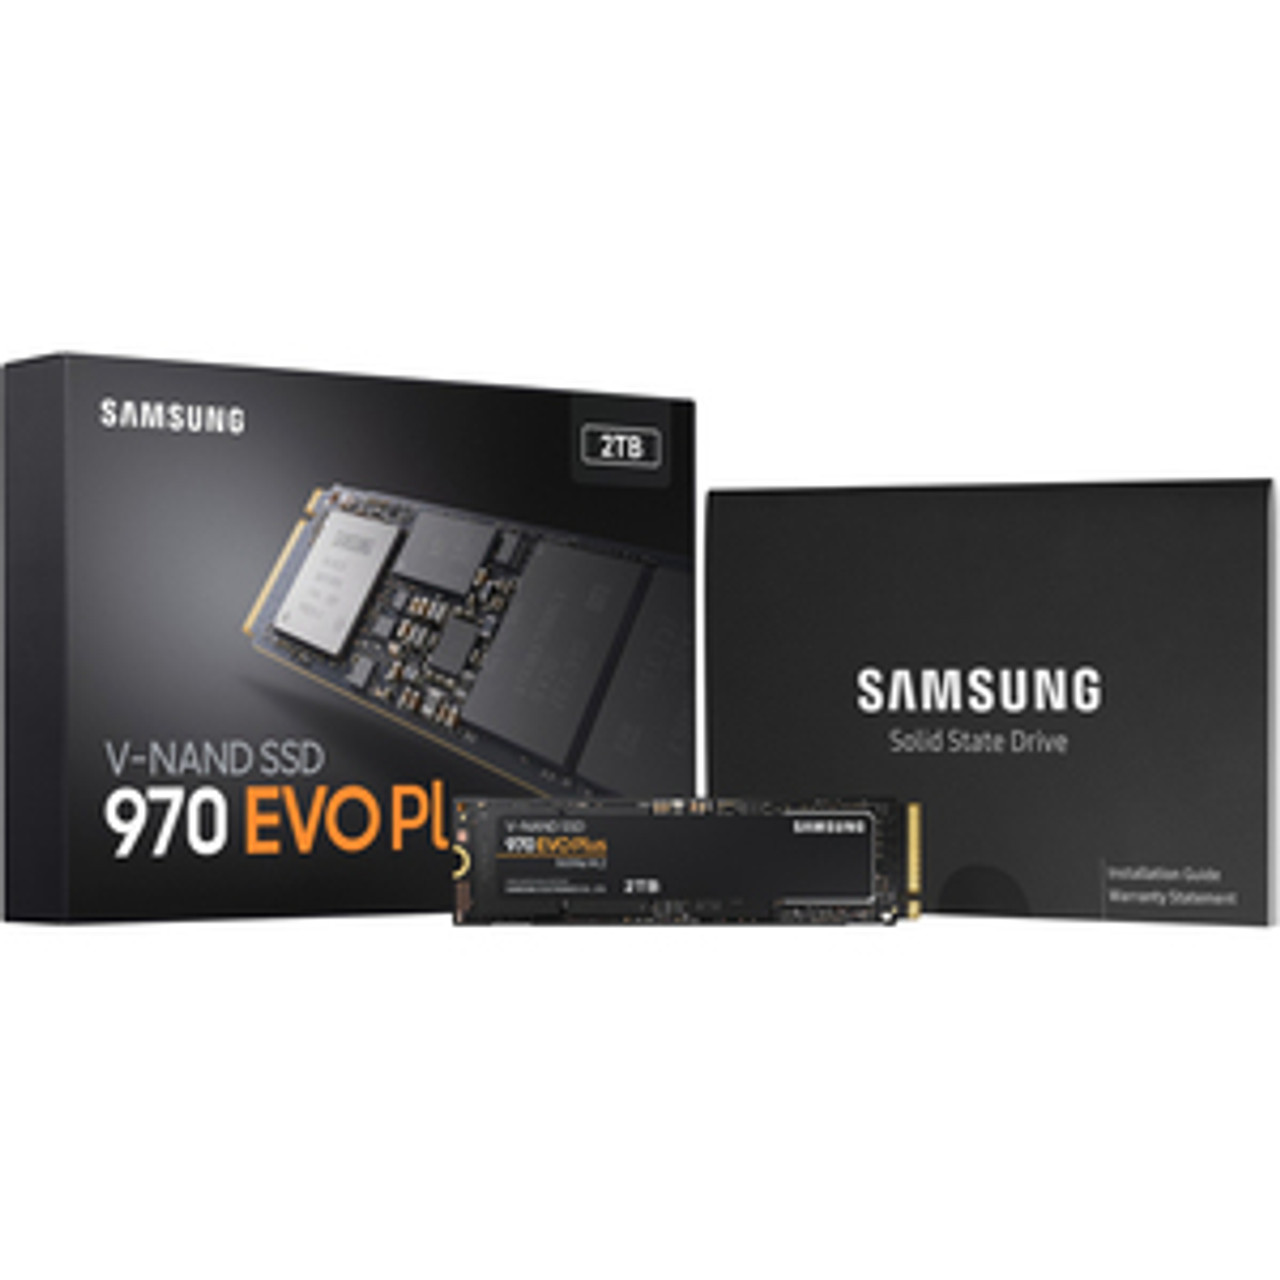 Samsung 970 EVO Plus 2 TB Solid State Drive - M.2 2280 Internal - PCI Express (PCI Express 3.0 x4) - 1200 TB TBW - 3500 MB/s Maximum Read Transfer Rate - 256-bit Encryption Standard - 5 Year Warranty M.2 INTERNAL COMMERCIAL